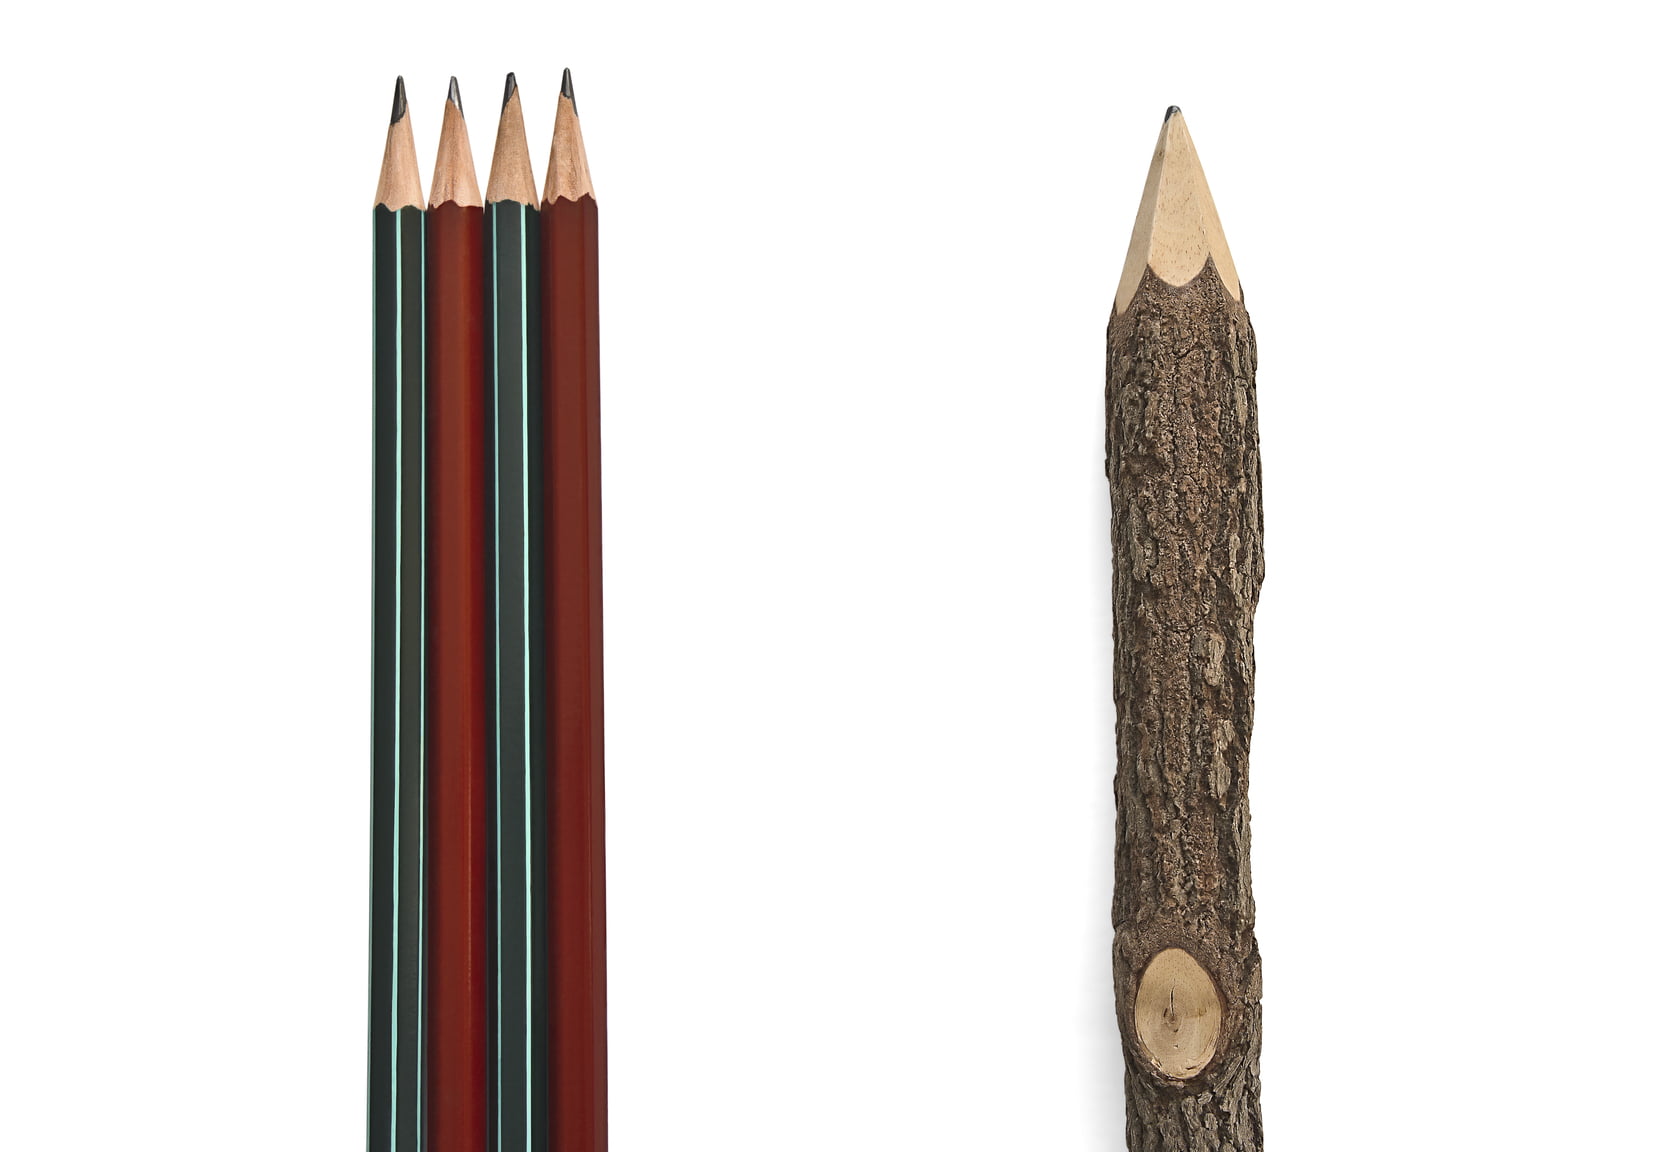 different pencils